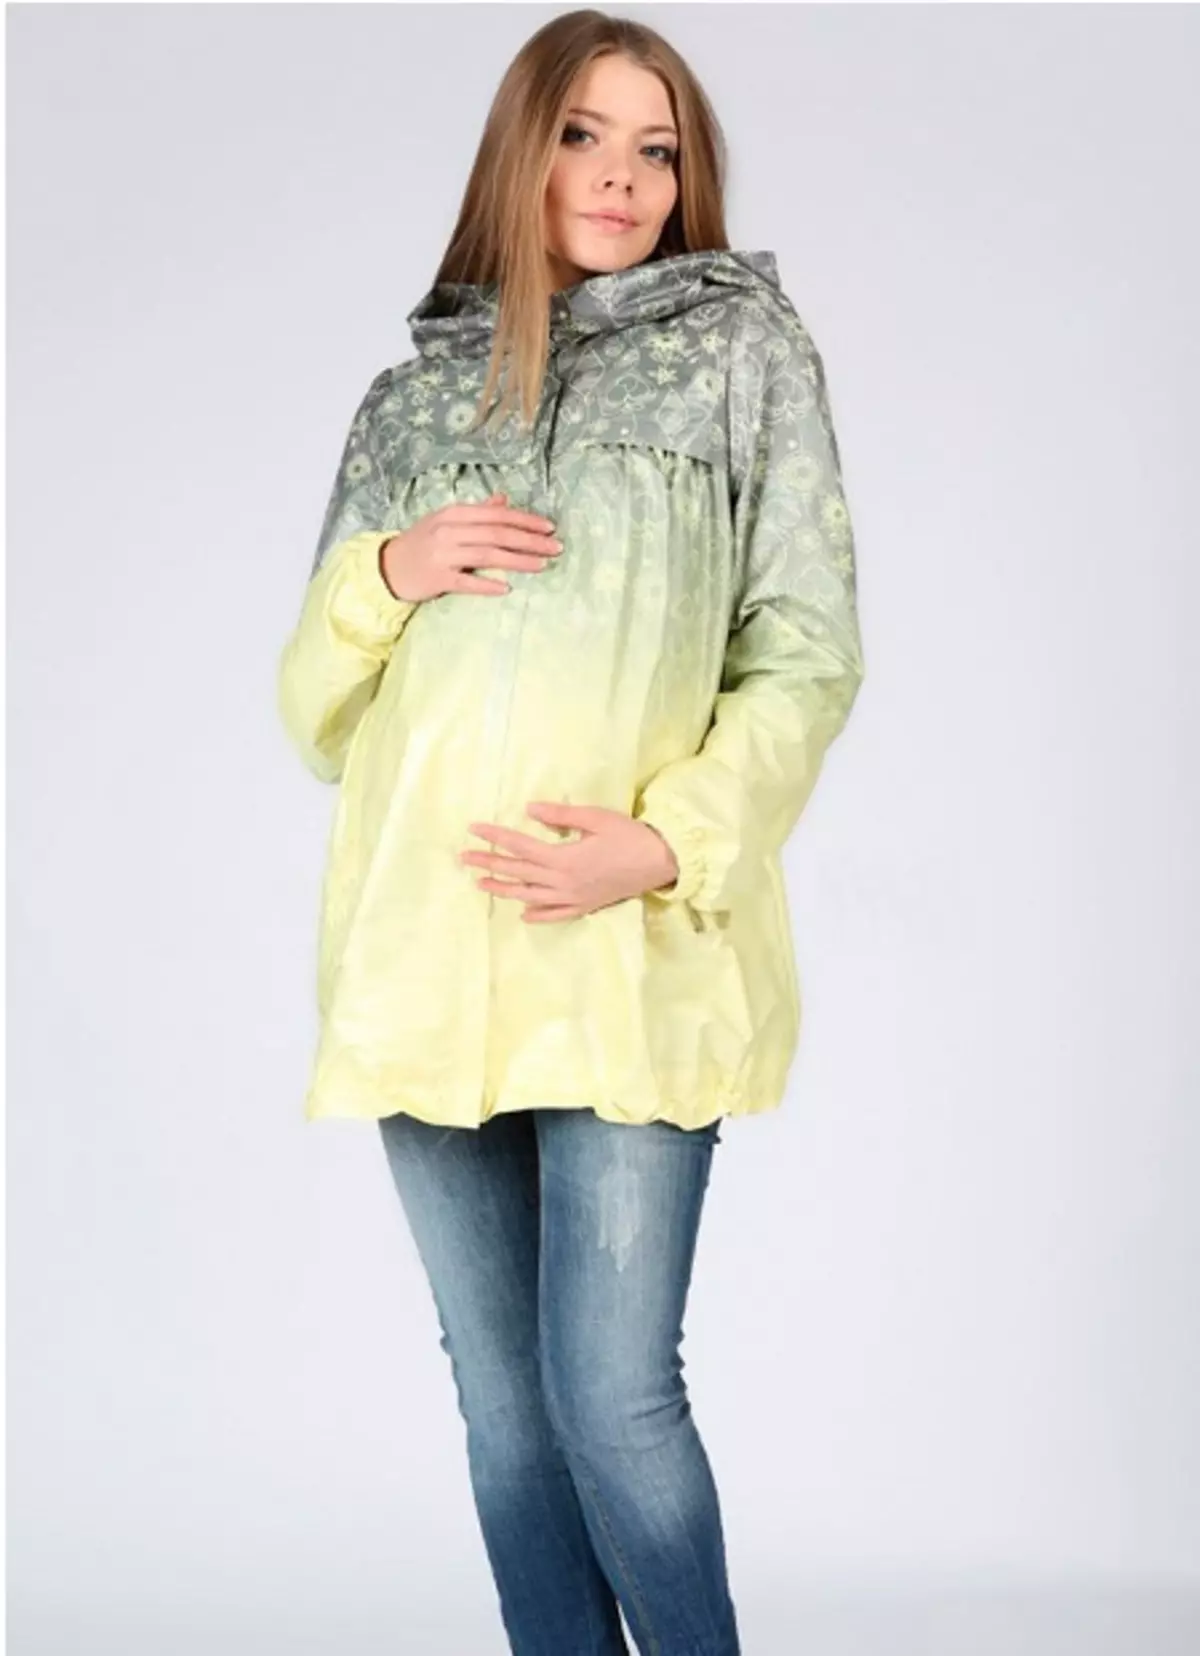 Callao para mulleres embarazadas (40 fotos): abrigo e capa e chaqueta Cloak por Adel, HM, Modress e Mama doce 359_3